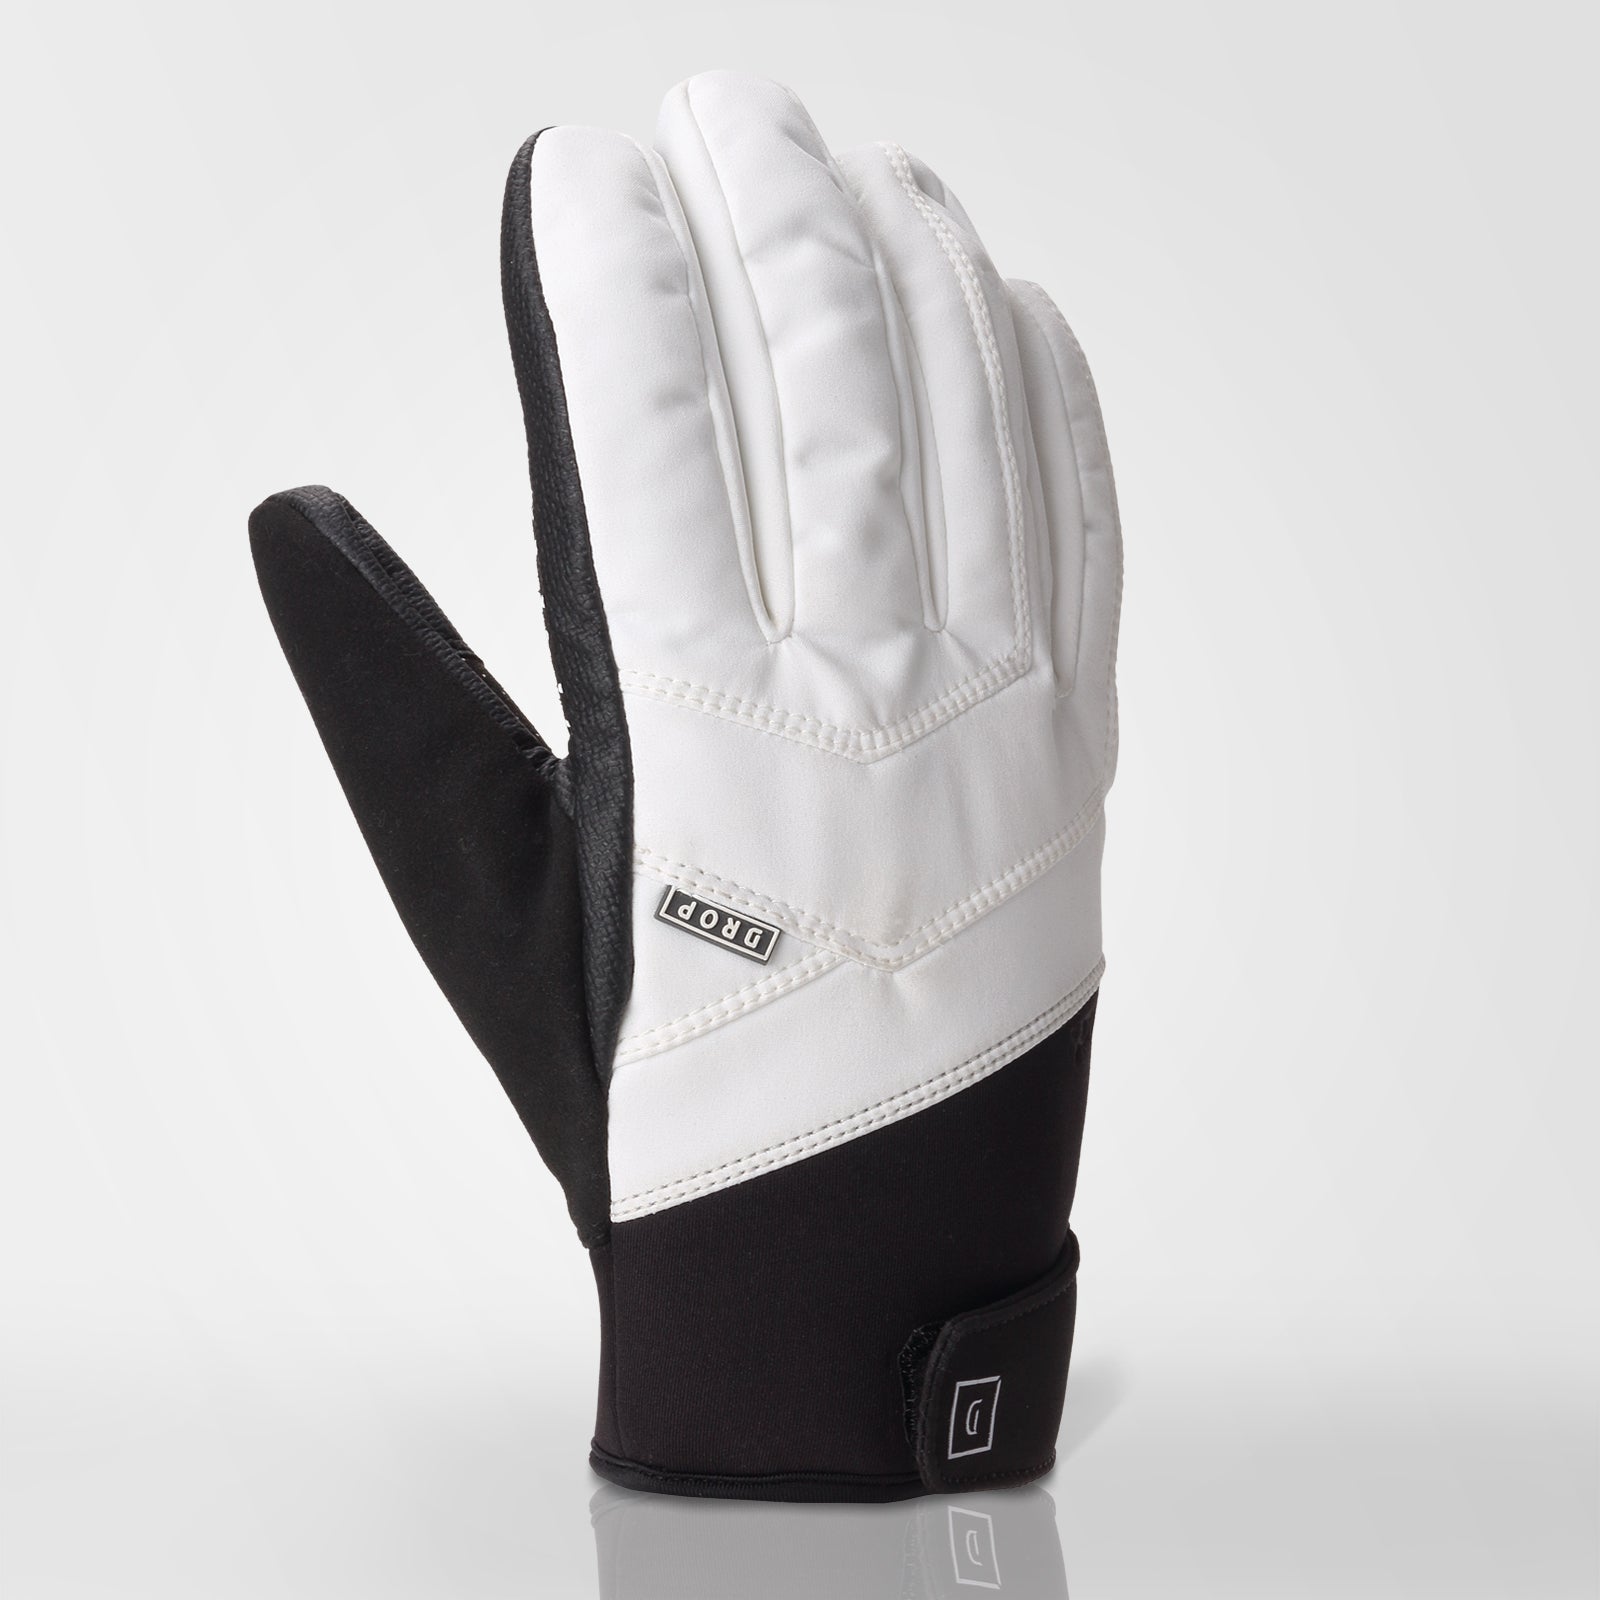 Sierra Aquabloc Park and Pipe Gloves, Winter Snow Gloves. - DROPMFG White/Black / Mens - S